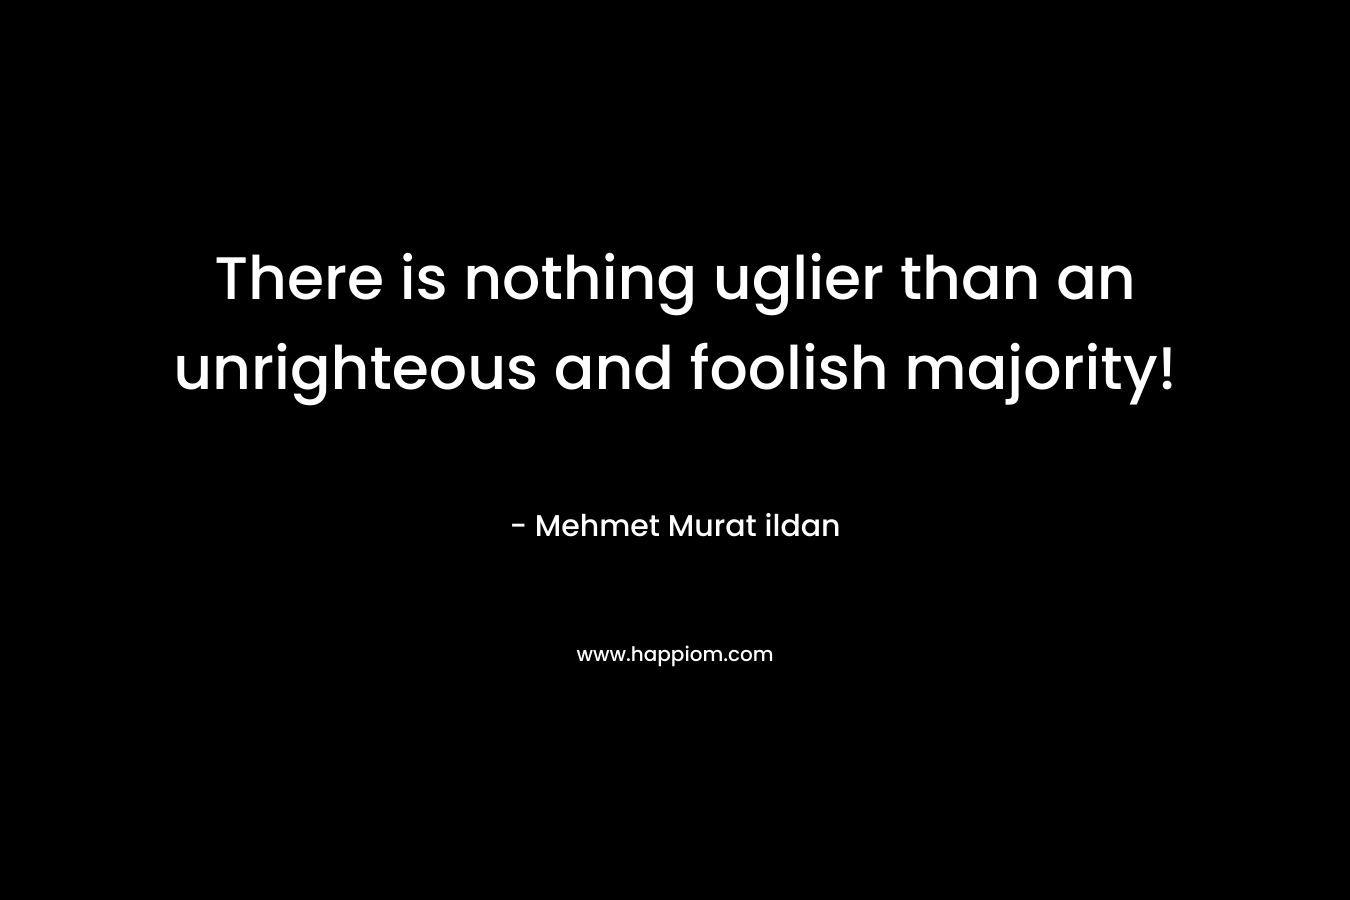 There is nothing uglier than an unrighteous and foolish majority! – Mehmet Murat ildan